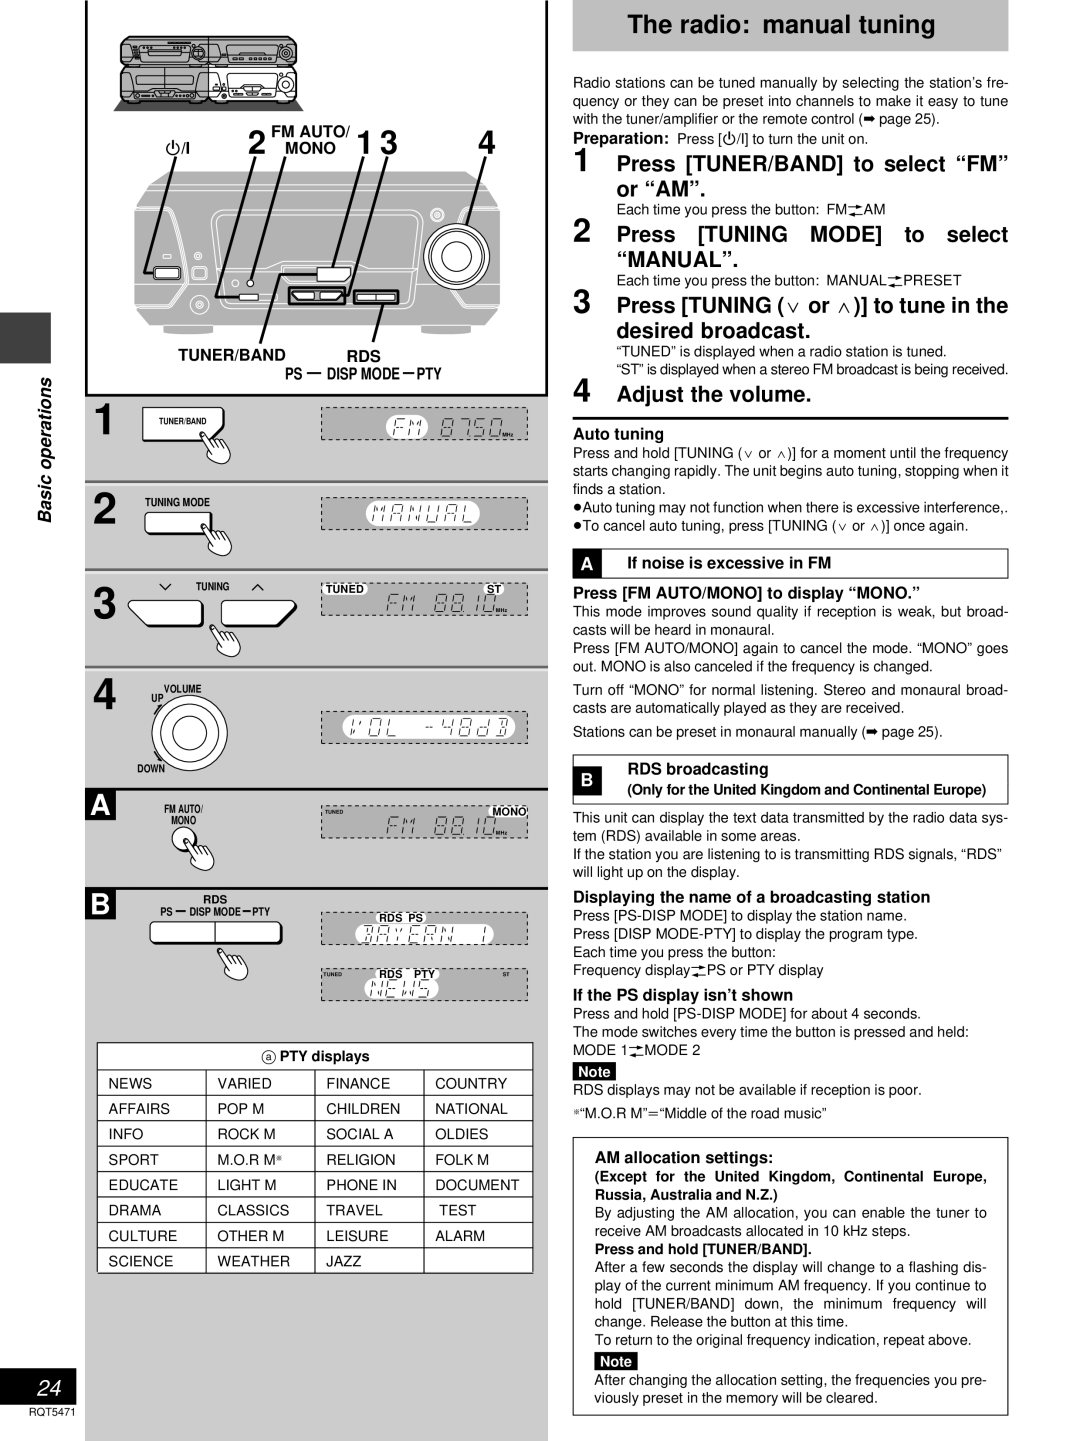 Technics SC-DV170 The radio: manual tuning, Adjust the volume, Fm Auto, Mono, Tuner/Band, Disp Mode, Auto tuning 